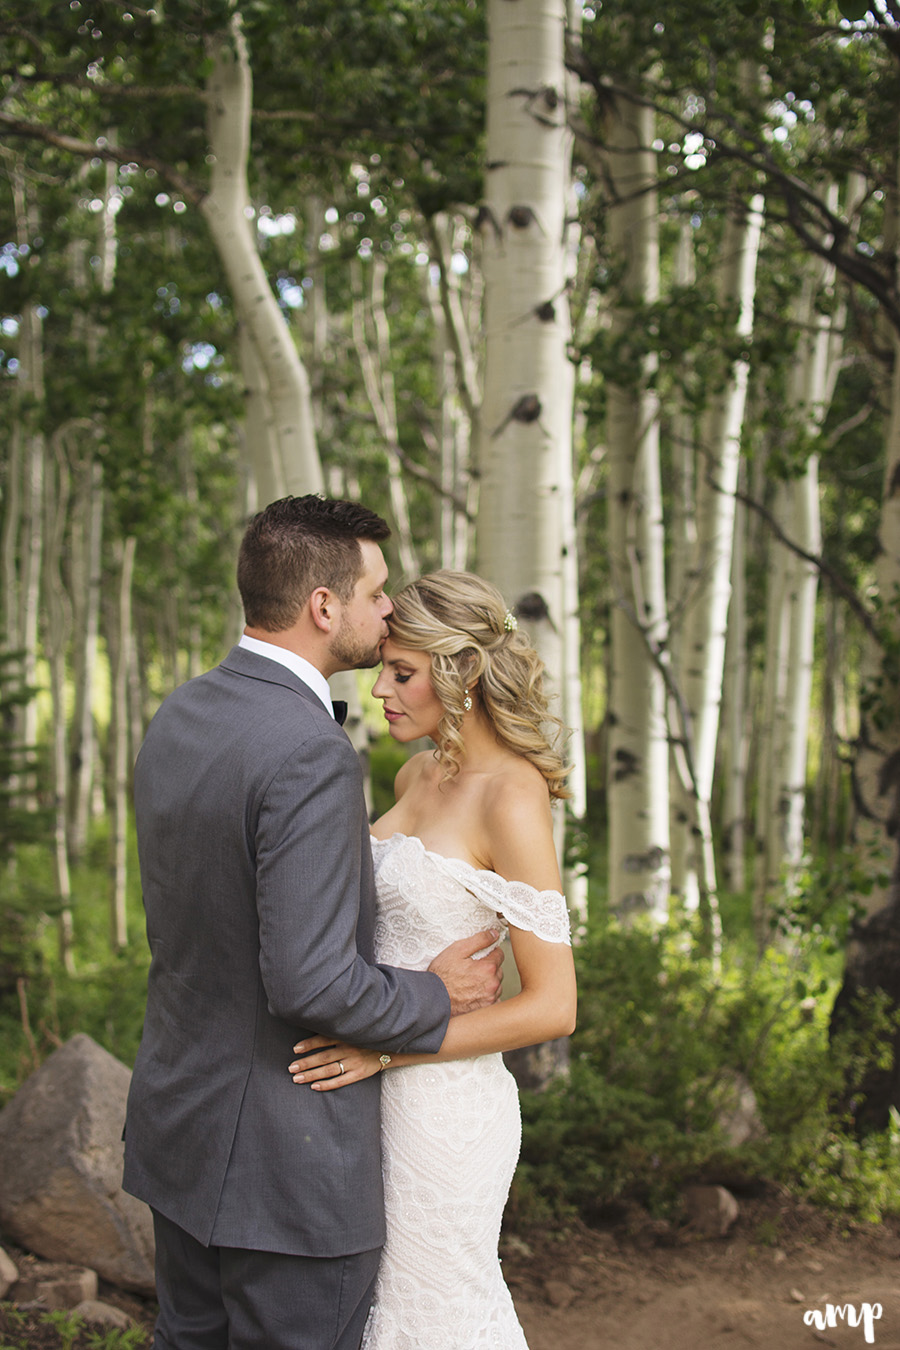 Wedding at Powderhorn Ski Resort on the Grand Mesa, Colorado Wedding Photography